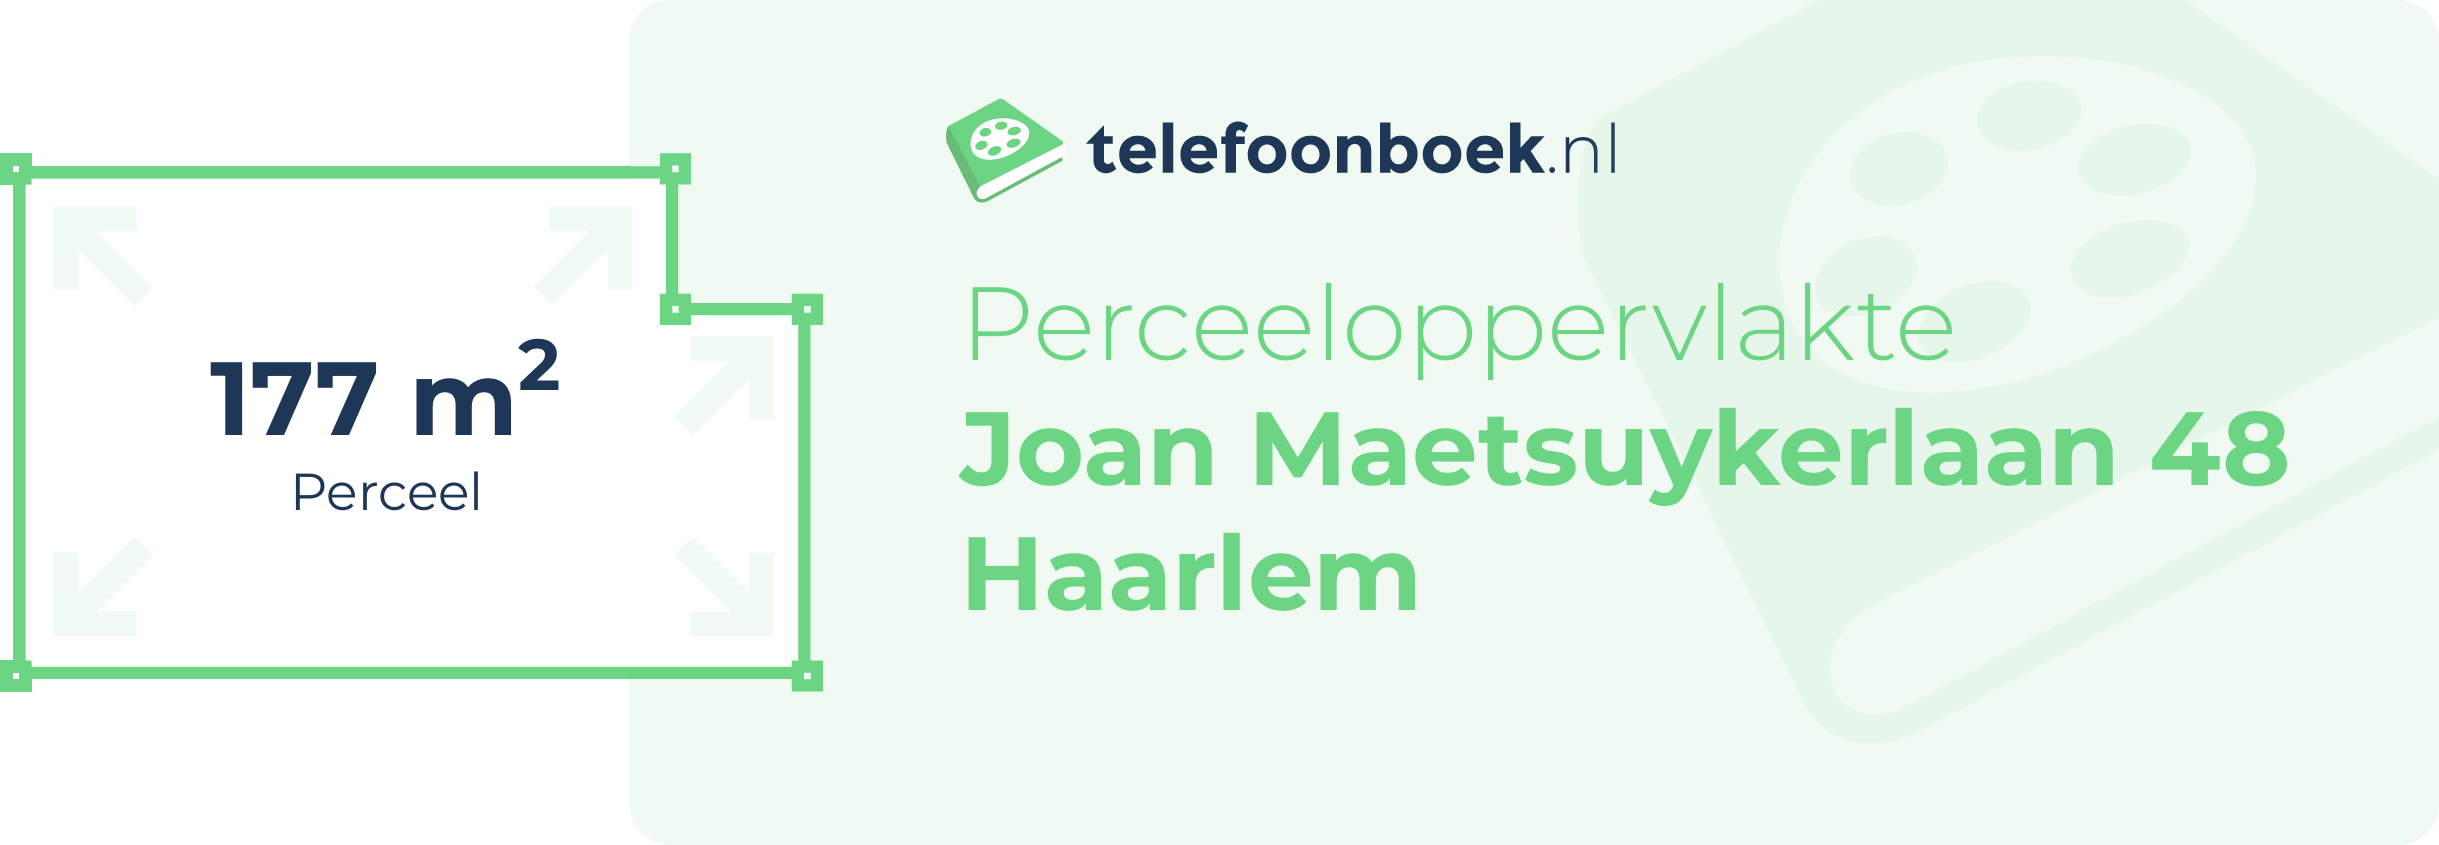 Perceeloppervlakte Joan Maetsuykerlaan 48 Haarlem